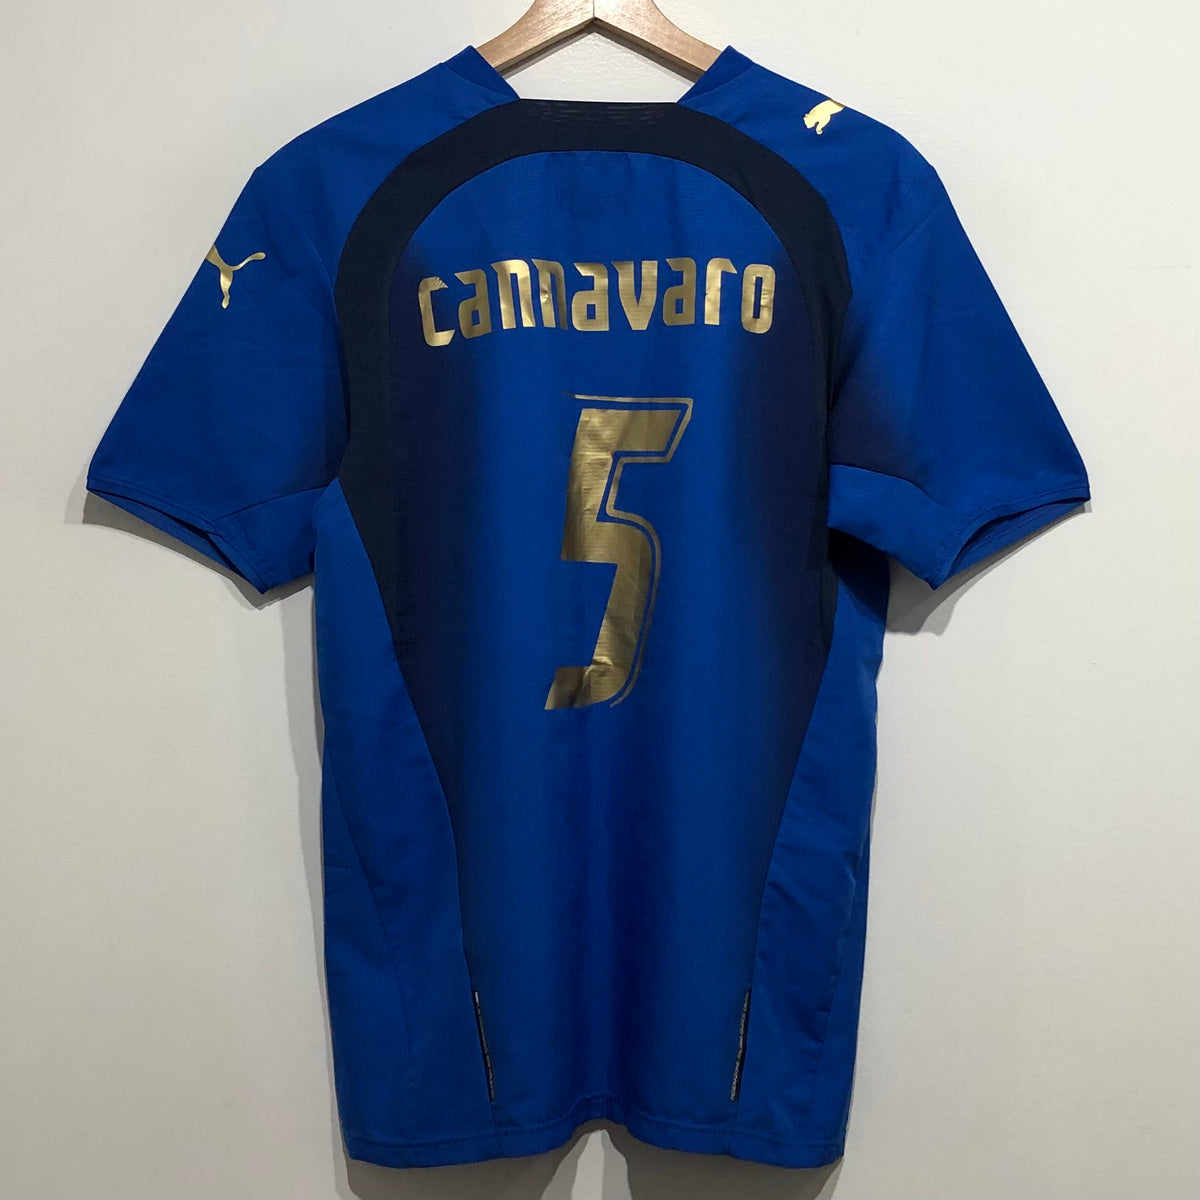 Fabio Cannavaro's authentic Italy jersey